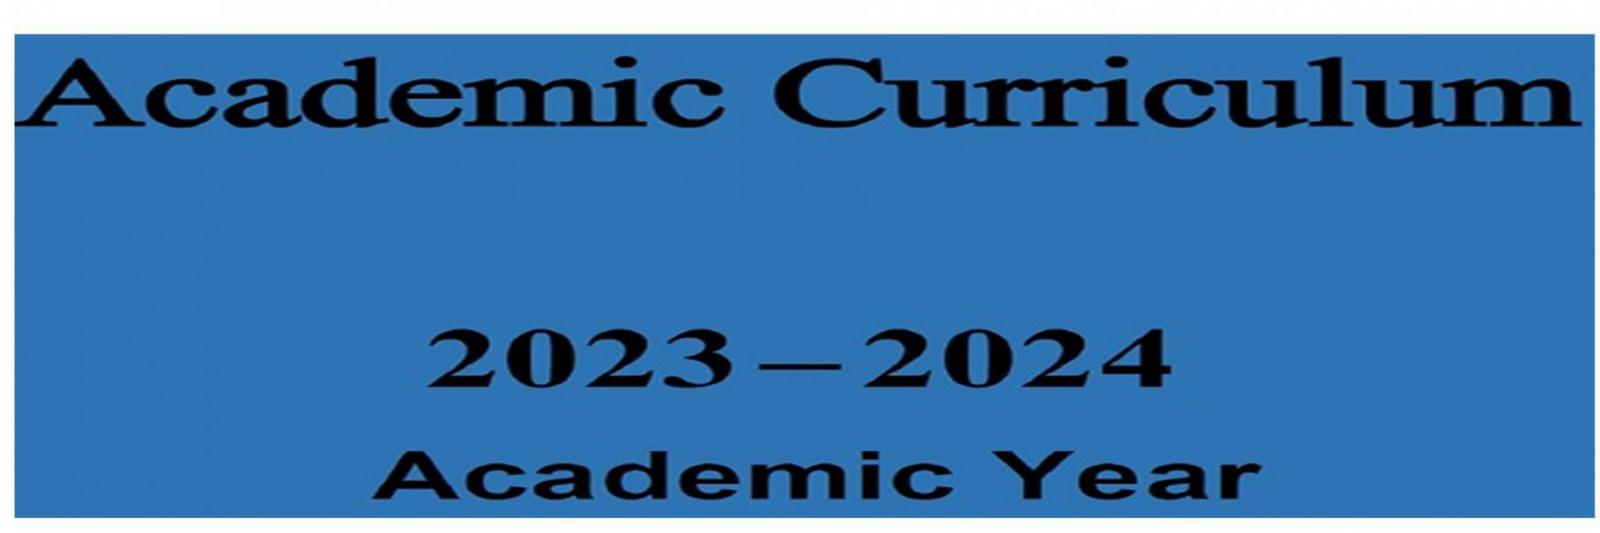 DAOC Academic Curriculum 2023 – 2024 Academic Year